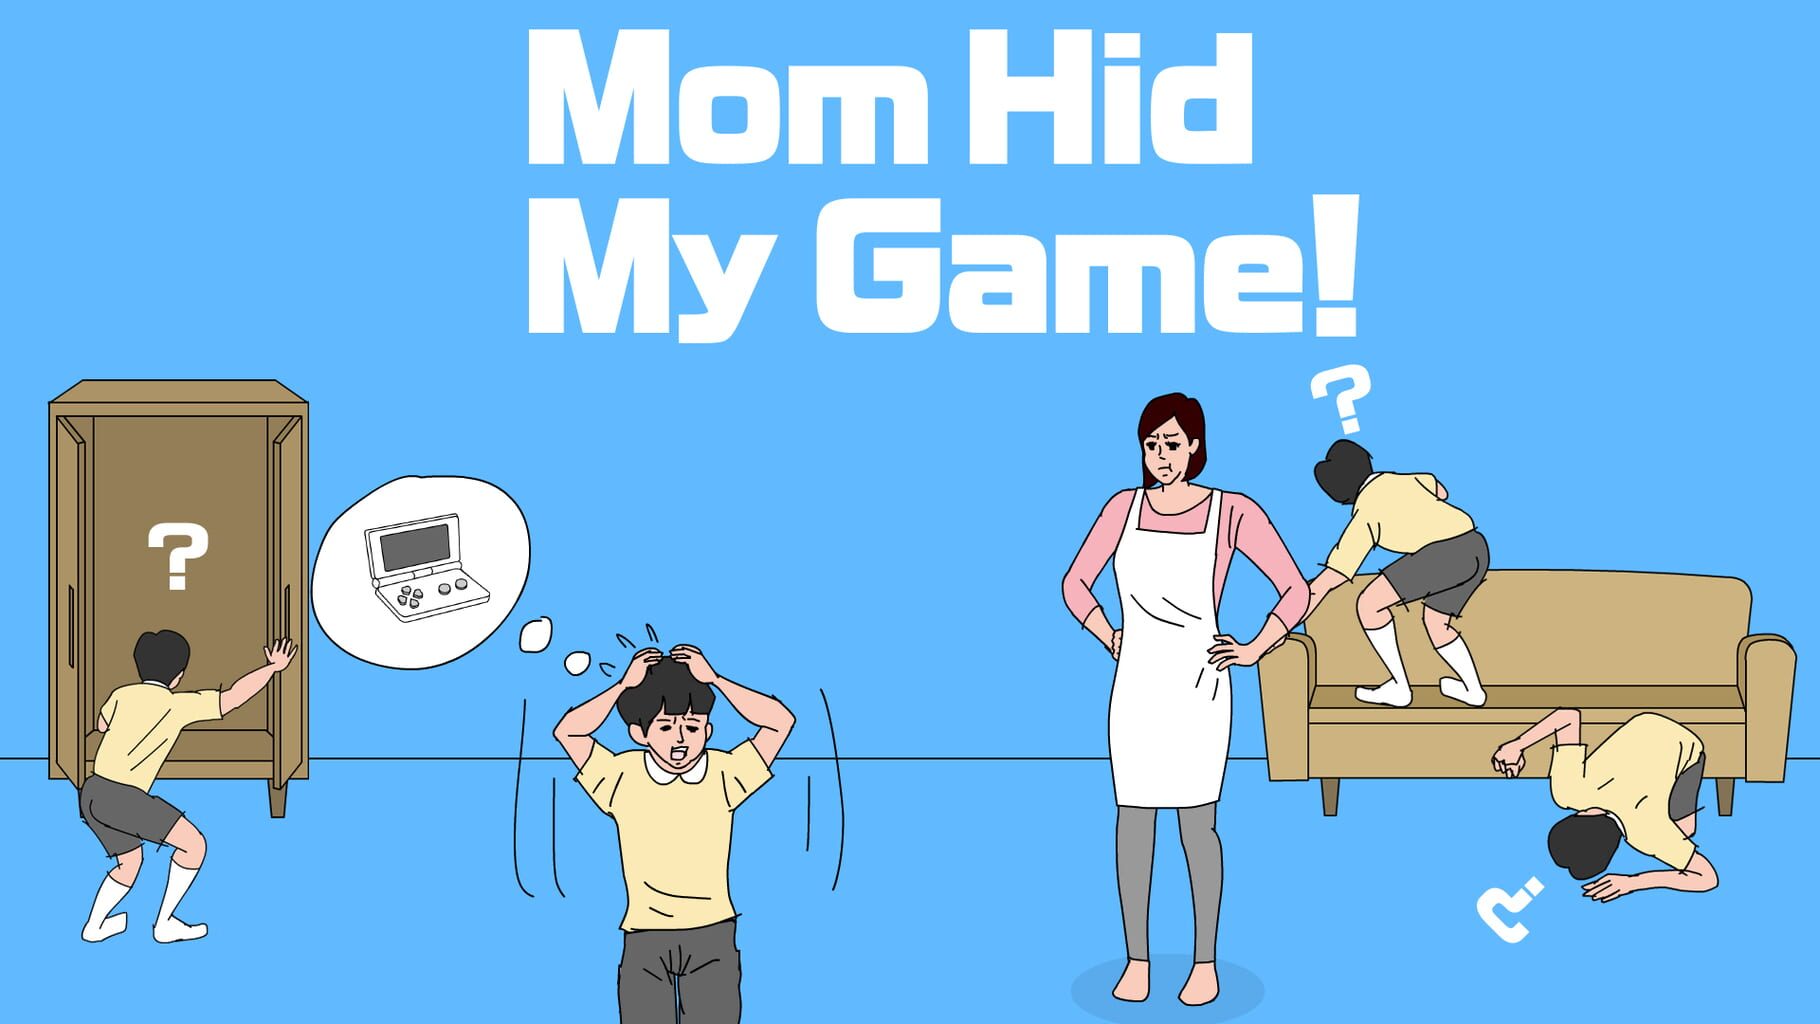 Arte - Mom Hid My Game!